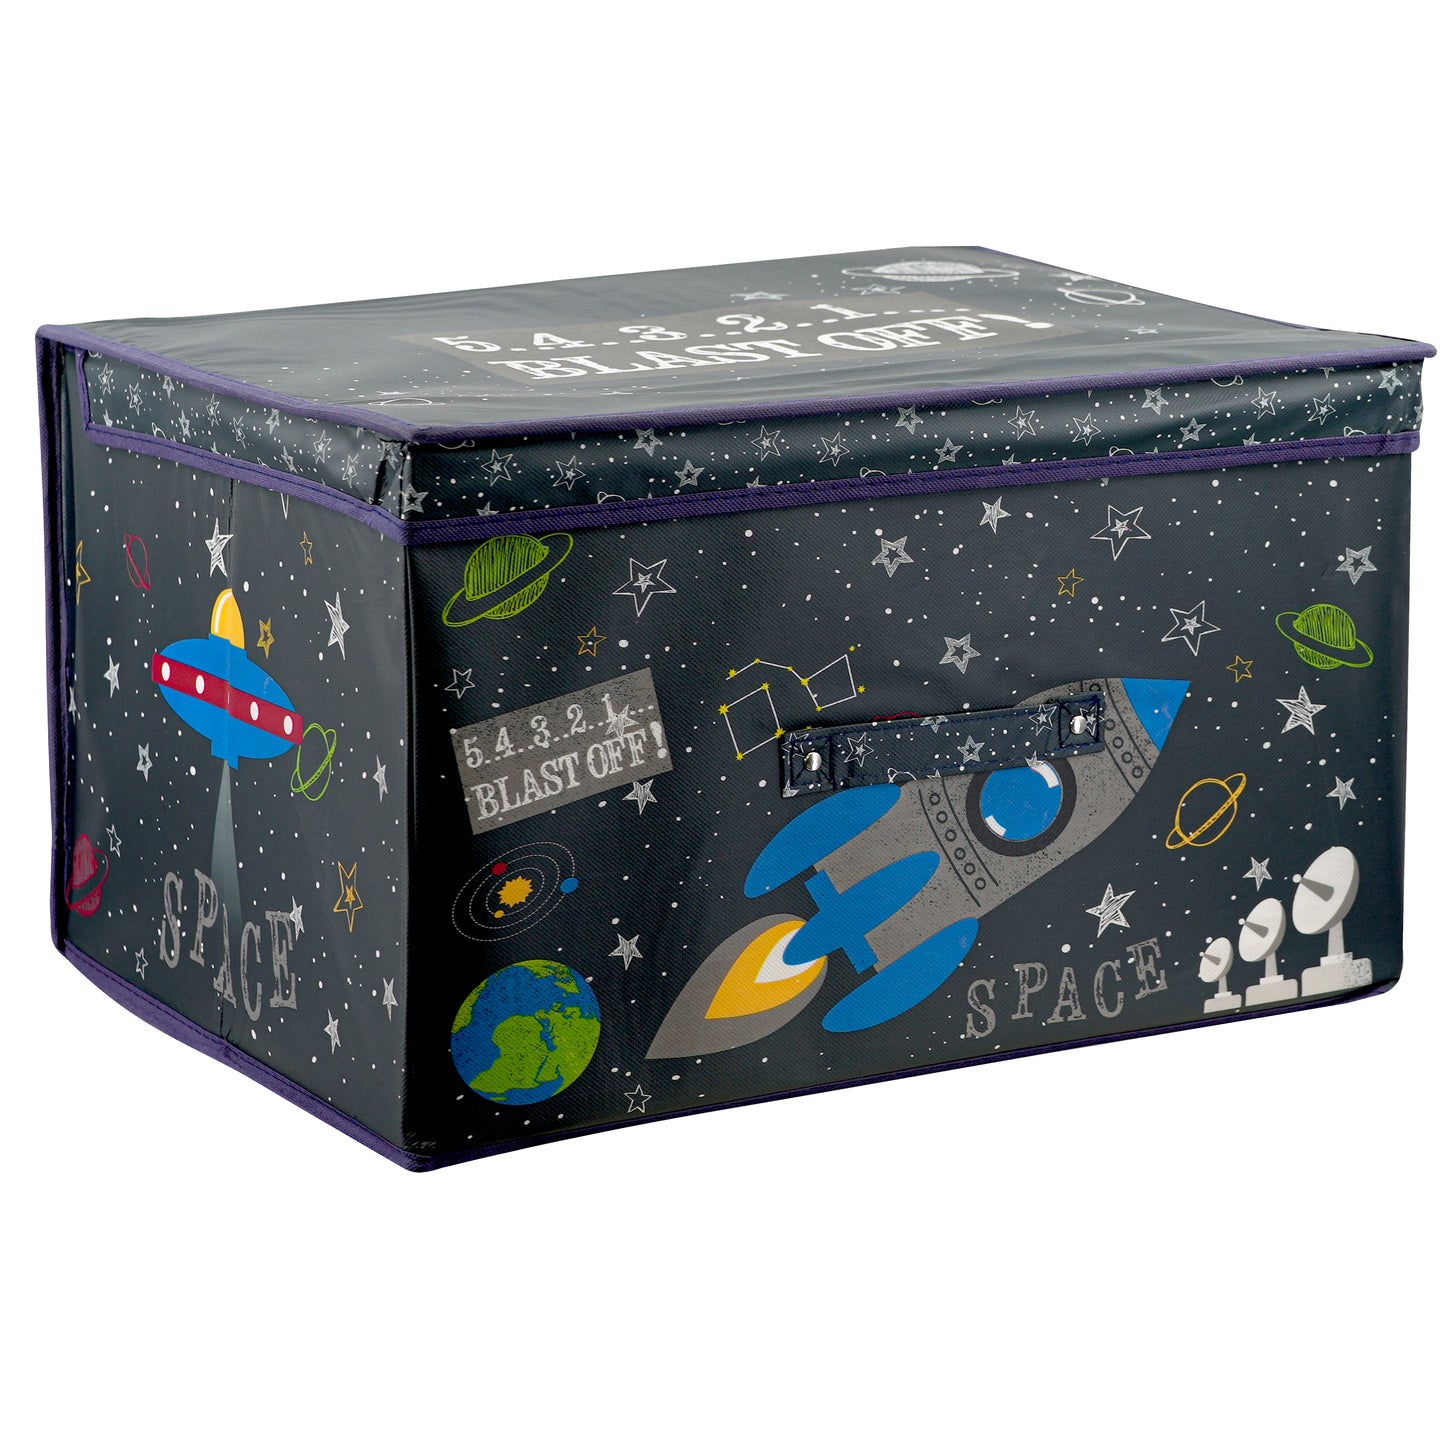 Blast Off Large Storage Box by The Magic Toy Shop - UKBuyZone